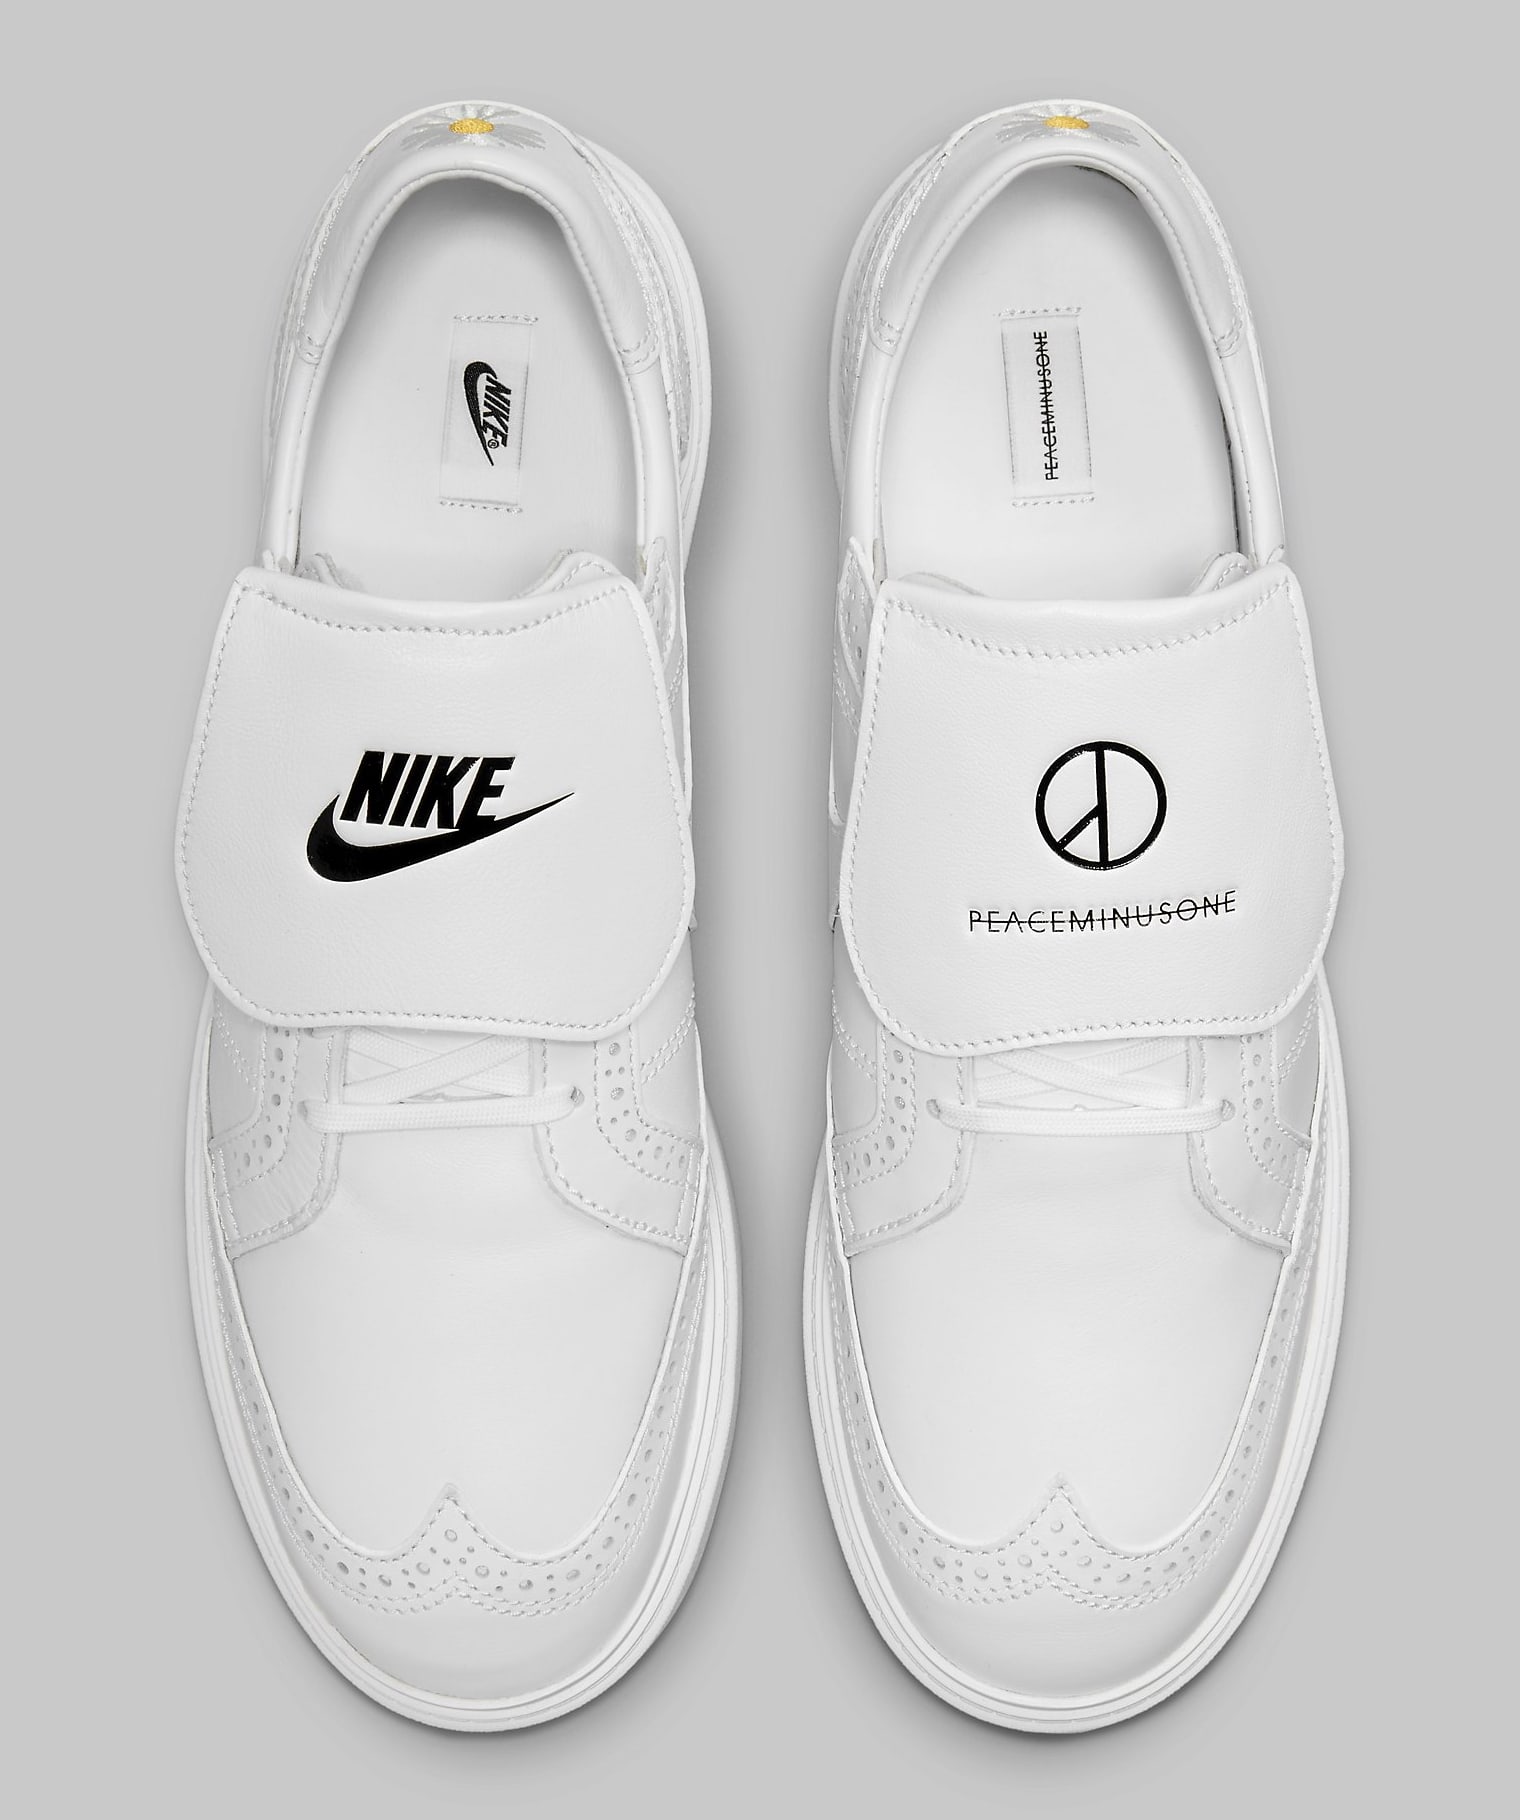 Peaceminusone x Nike Kwondo 1 'White' Release Date DH2482 100 